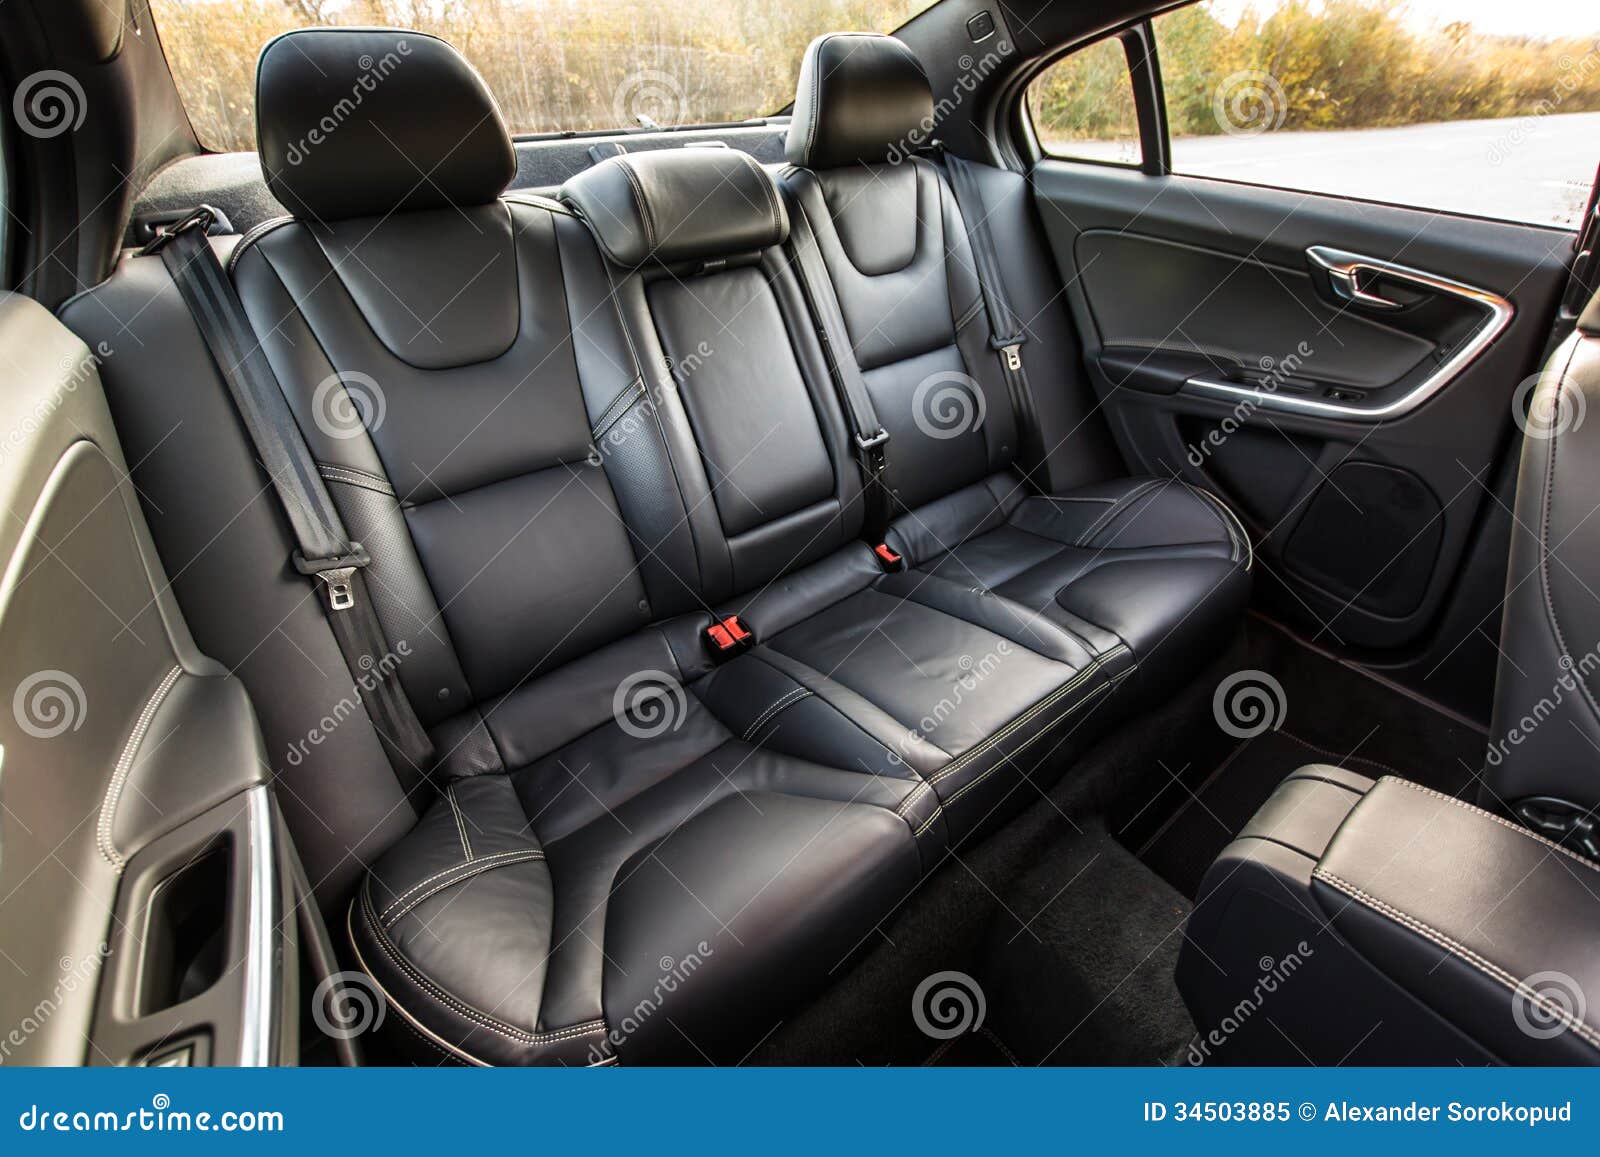 Luxury car interior stock image Image of model metallic